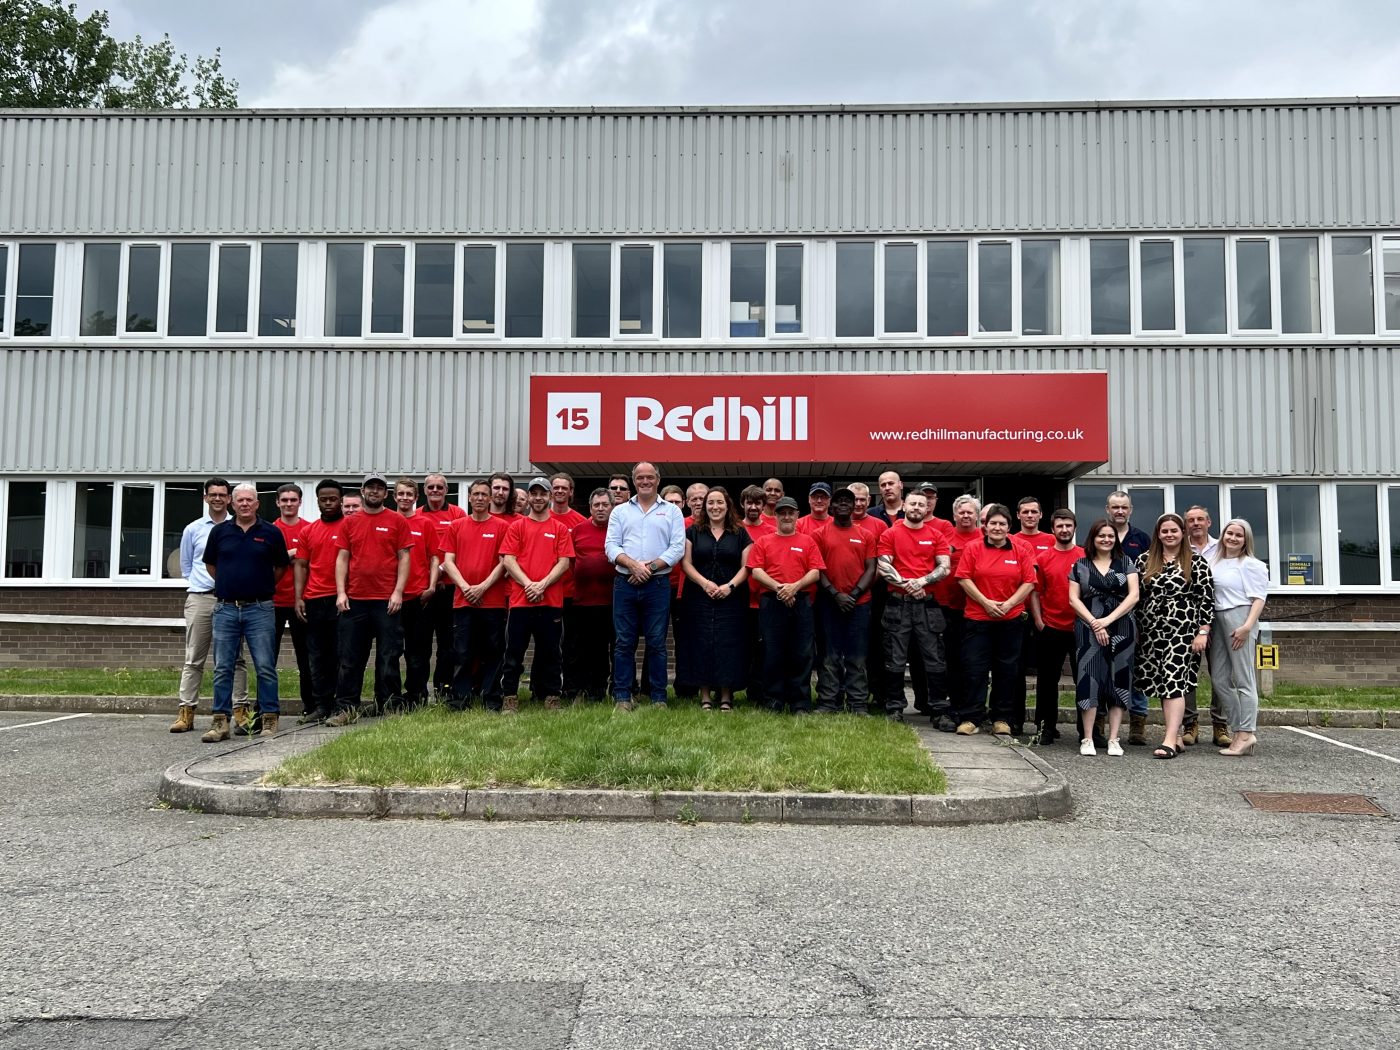 Alt - The Redhill Manufacturing Team